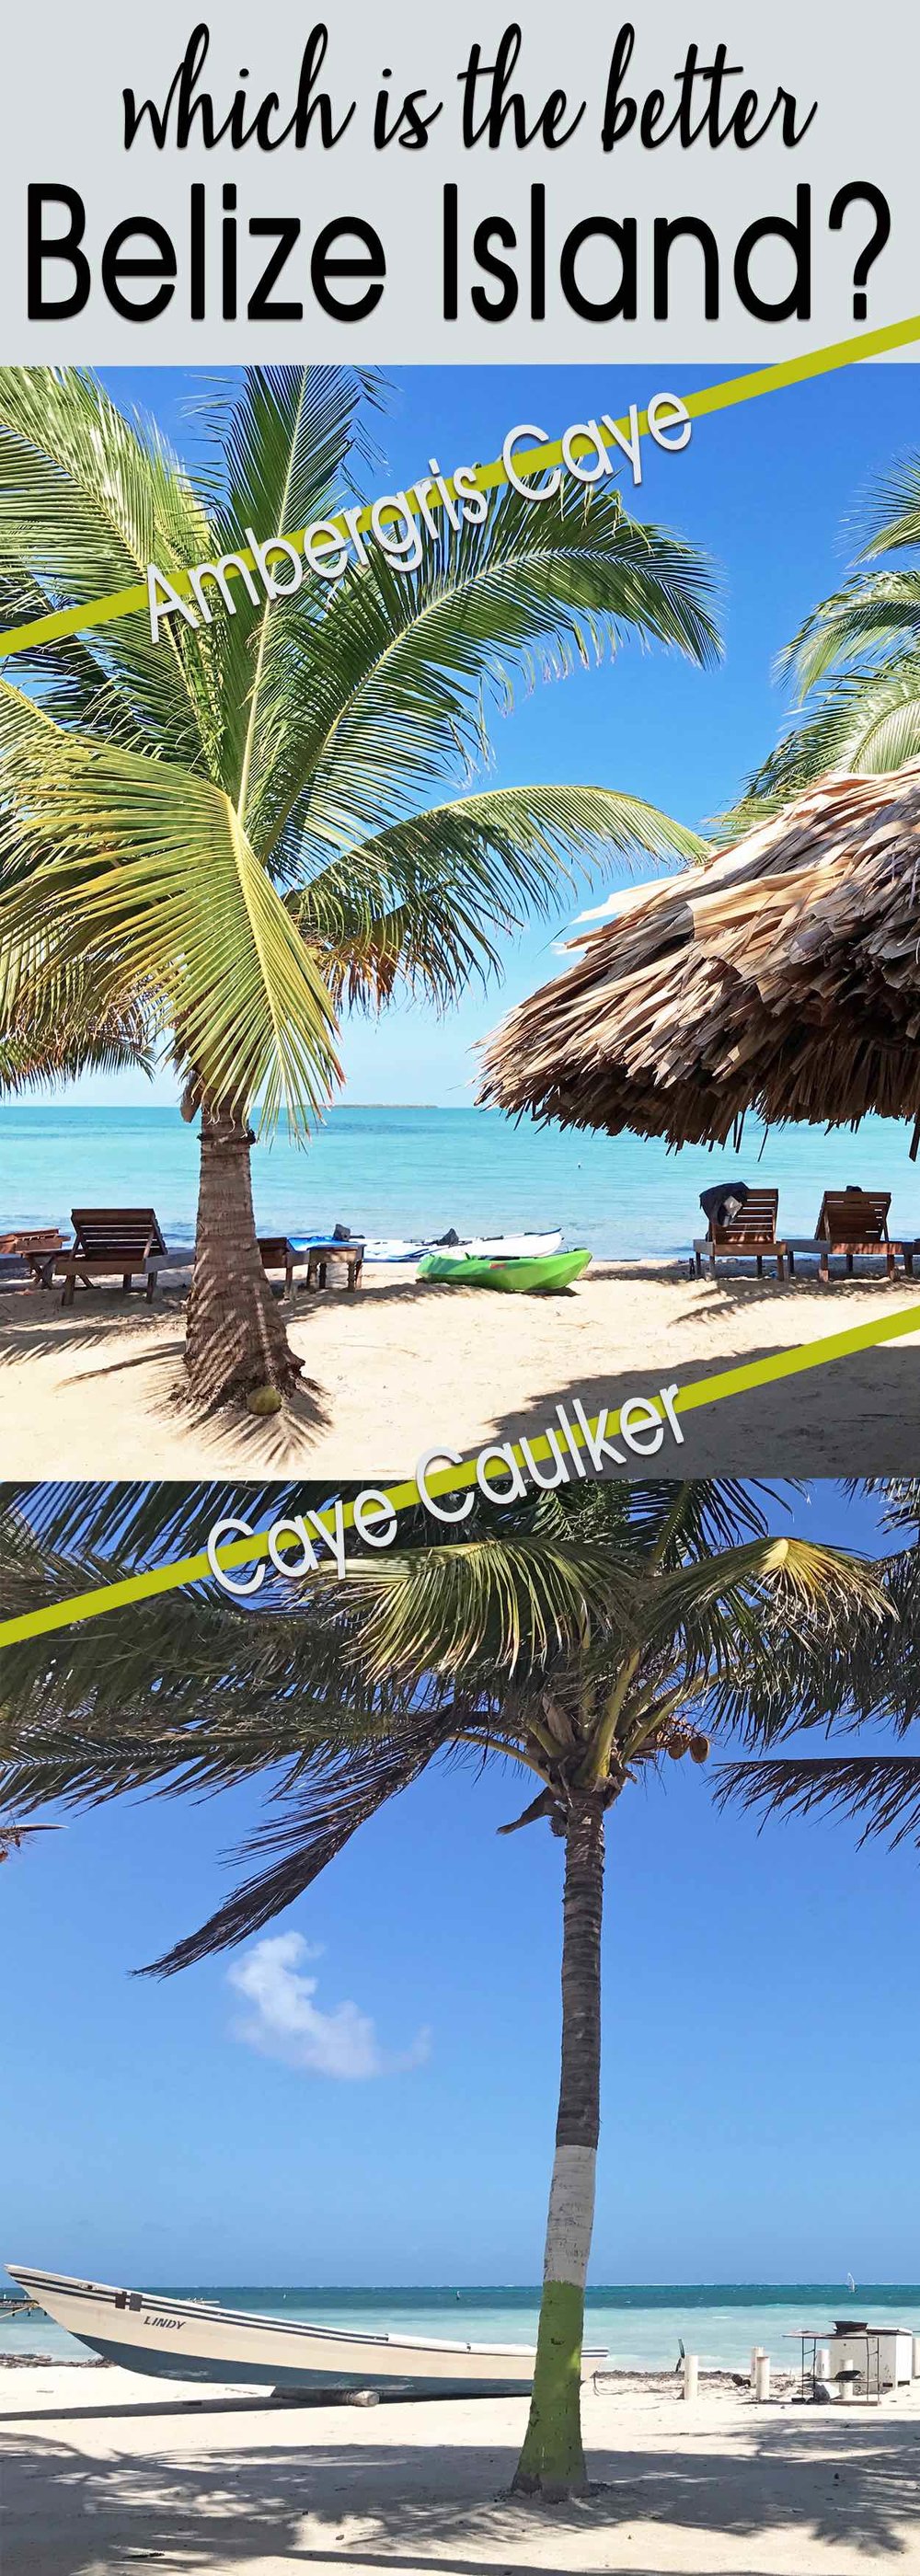 Ambergris Caye vs Caulker Caulker | Which Belize island is better?